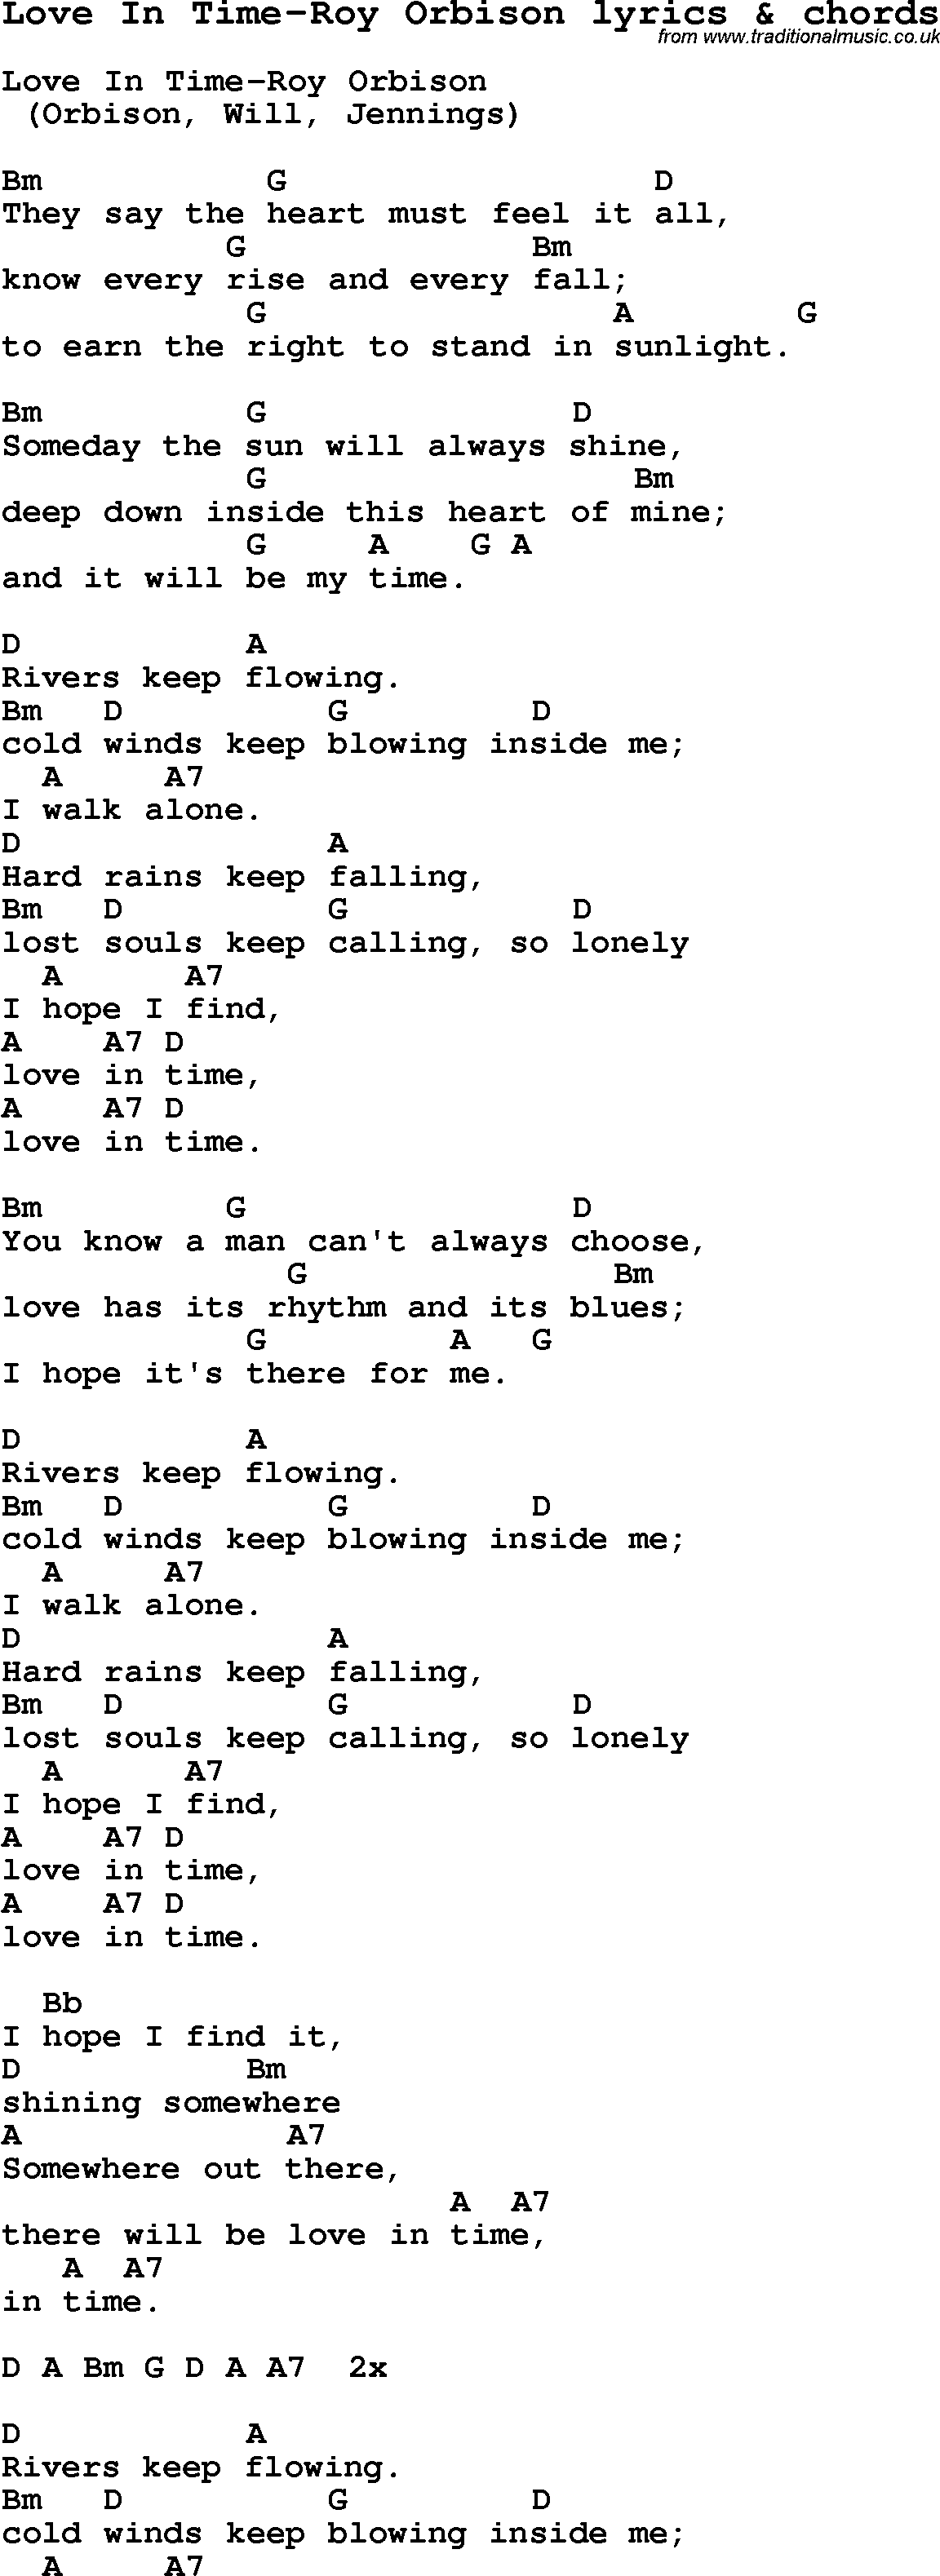 Love Song Lyrics for: Love In Time-Roy Orbison with chords for Ukulele, Guitar Banjo etc.